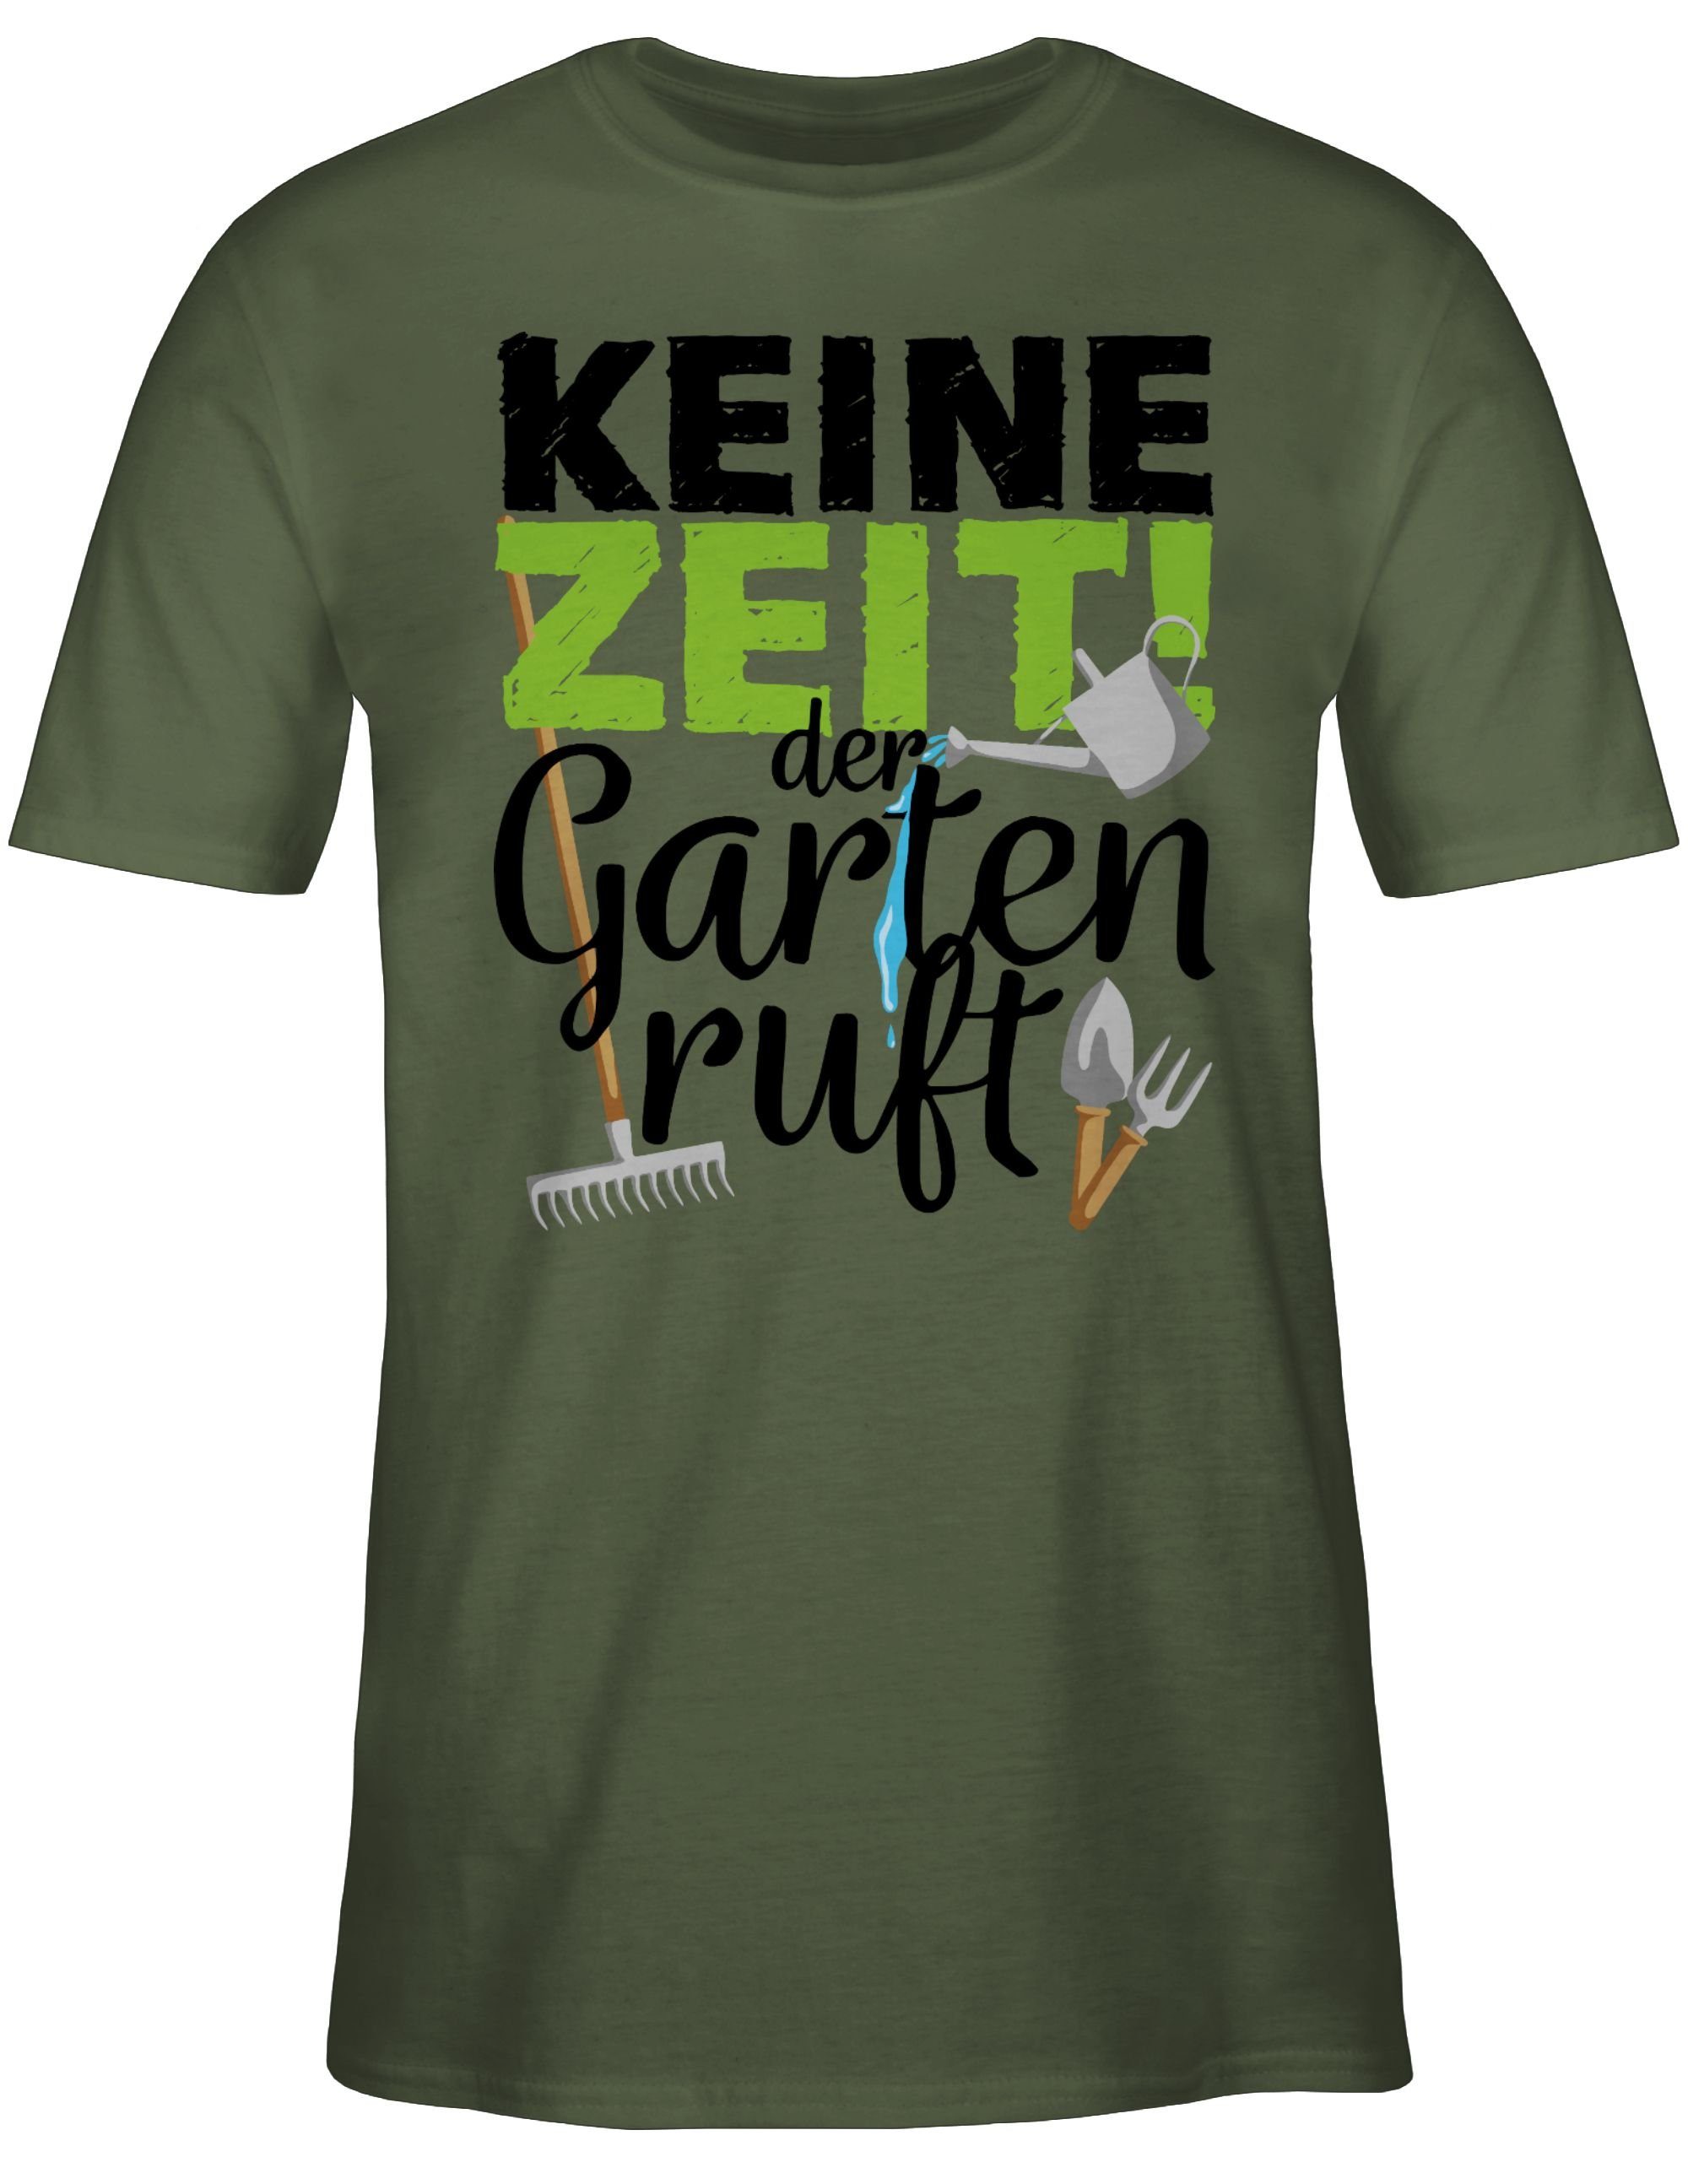 ruft Outfit Garten 1 - Keine der Gartengeräte Grün T-Shirt Army Shirtracer Zeit Hobby